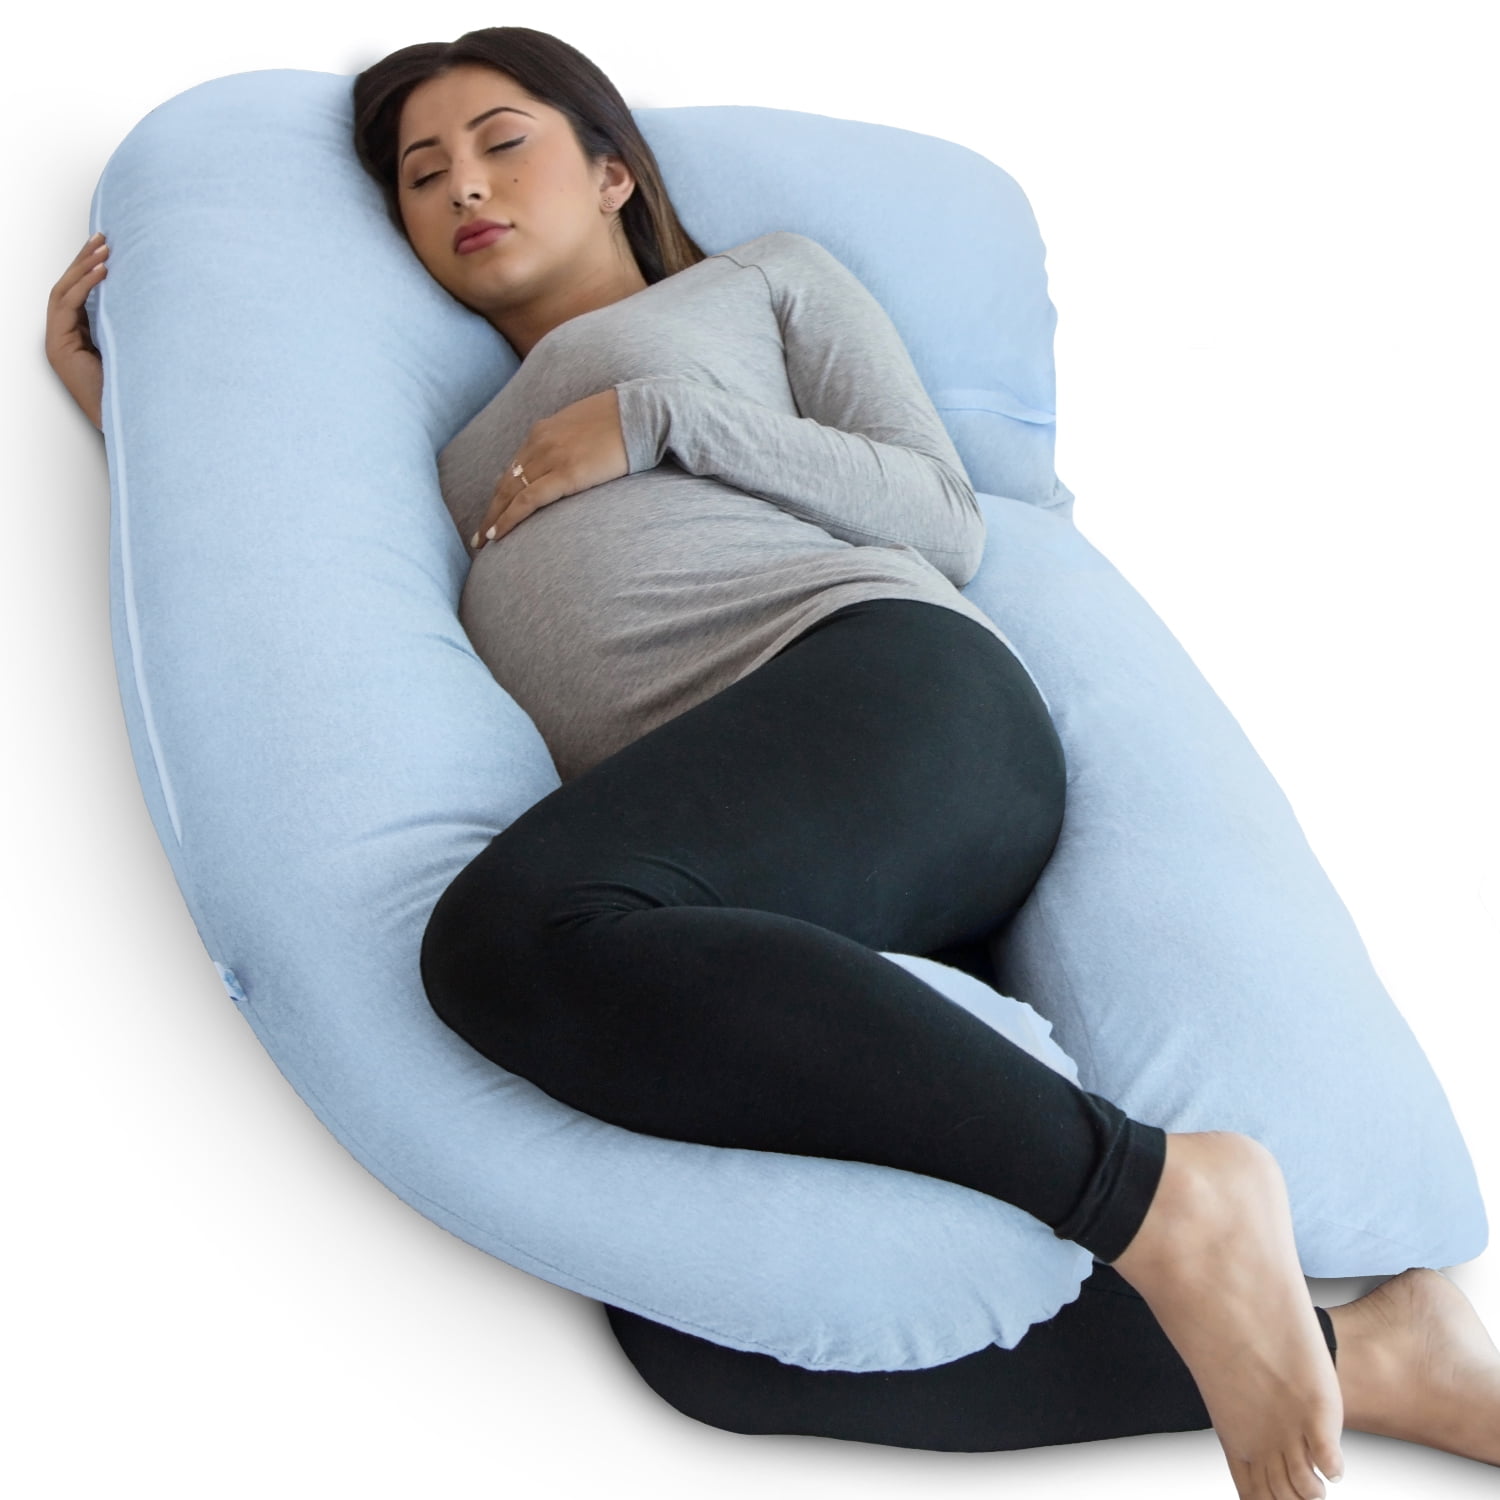 Pregnancy Pillow Side Sleepers Pregnant Women Body Pillow Support Waist Cushions 